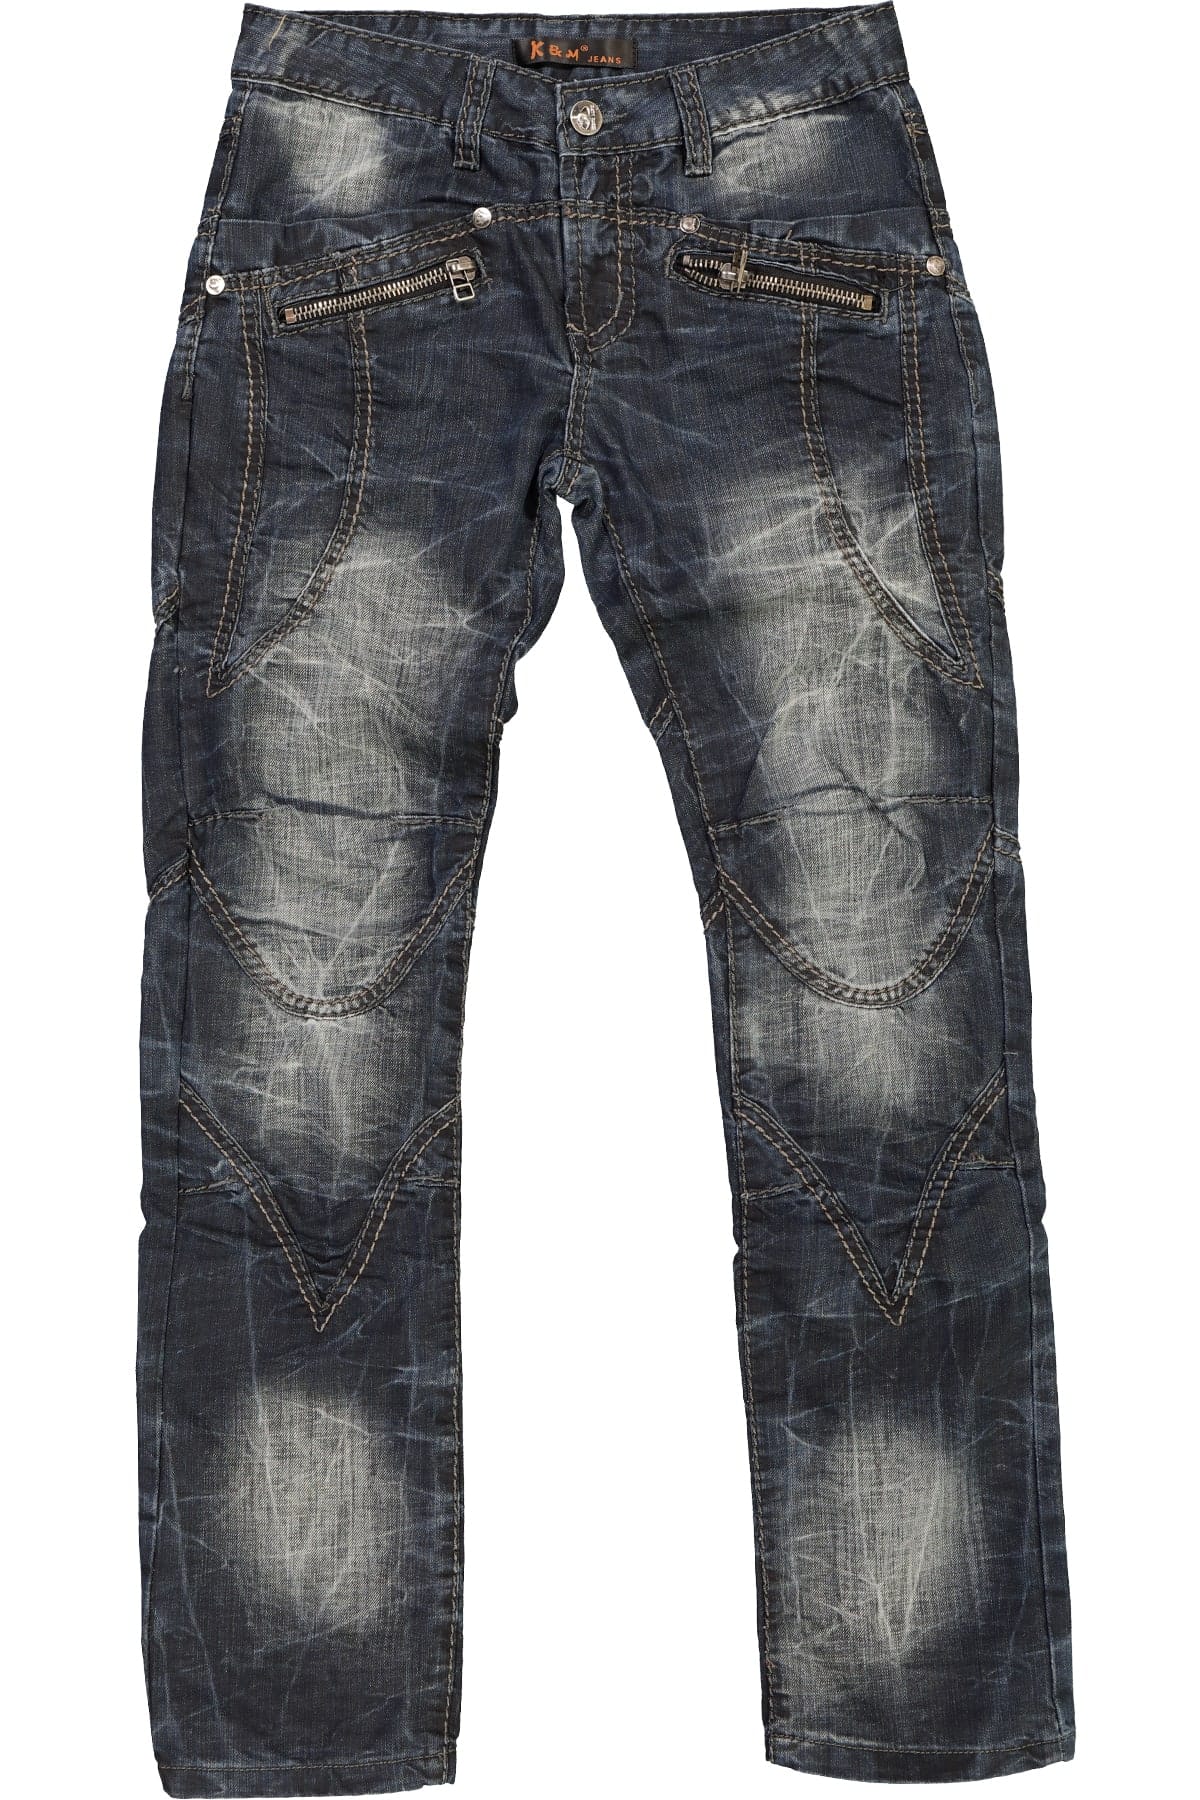 Kosmo Lupo Jeans Black-Blue Denim Pant